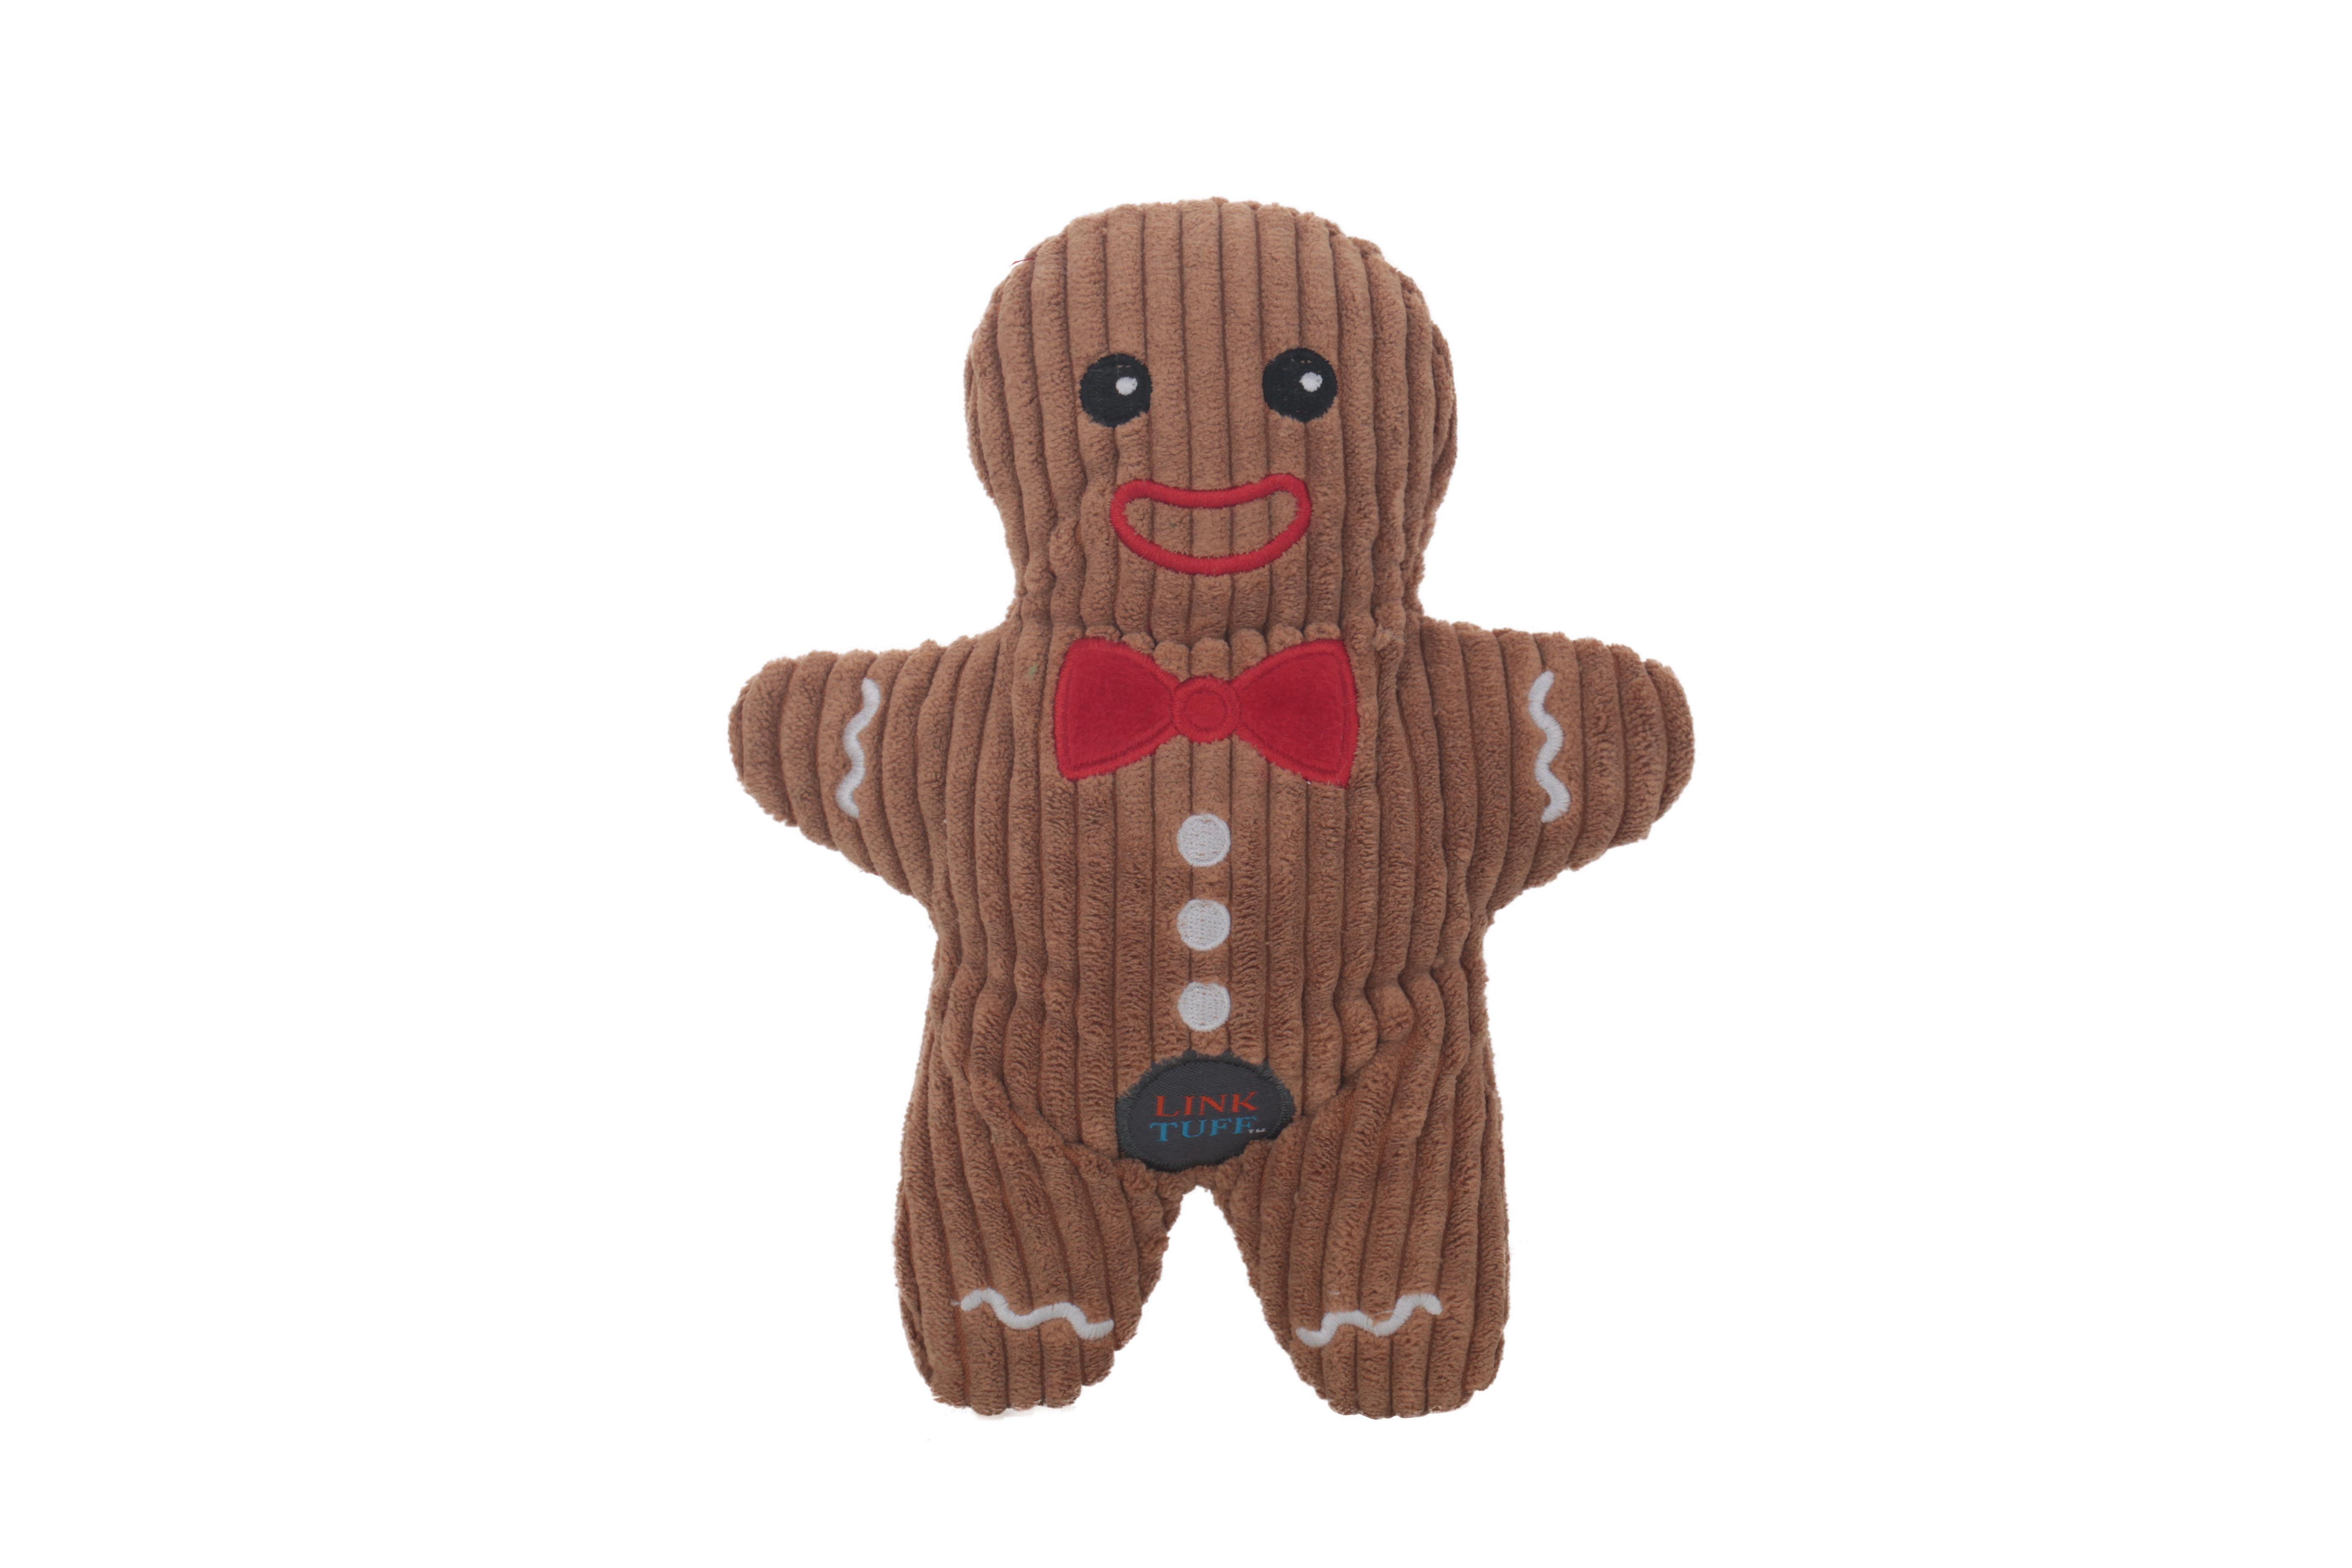 Christmas Theme Socks Crocodile Saliva Towel Wreath Gingerbread Man Interactive Plush Dog Chew Pet Toy Set